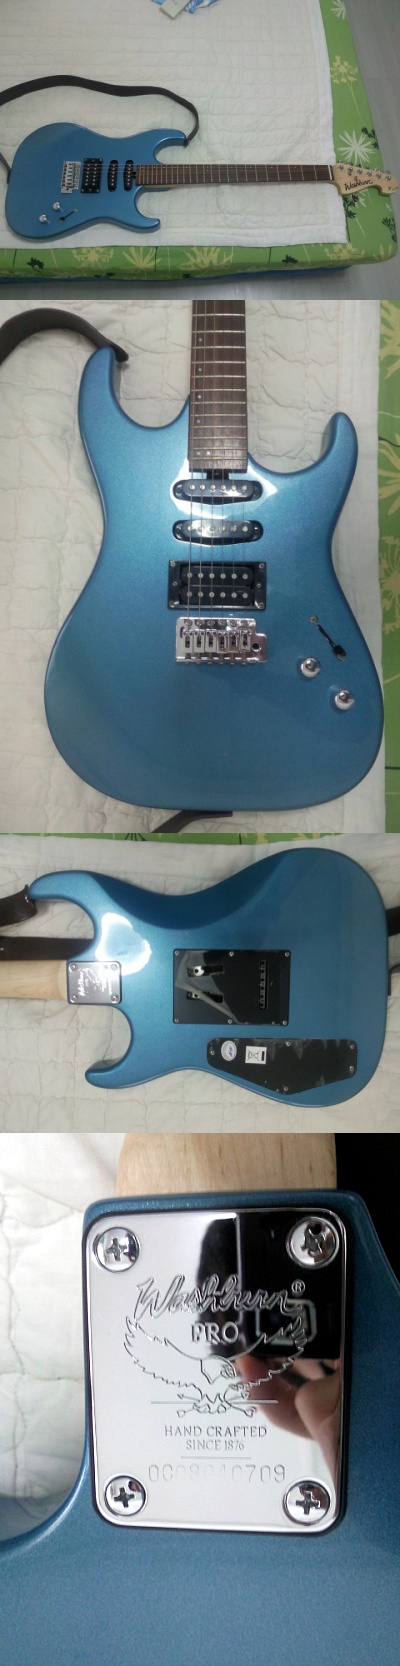 guitar3.jpg